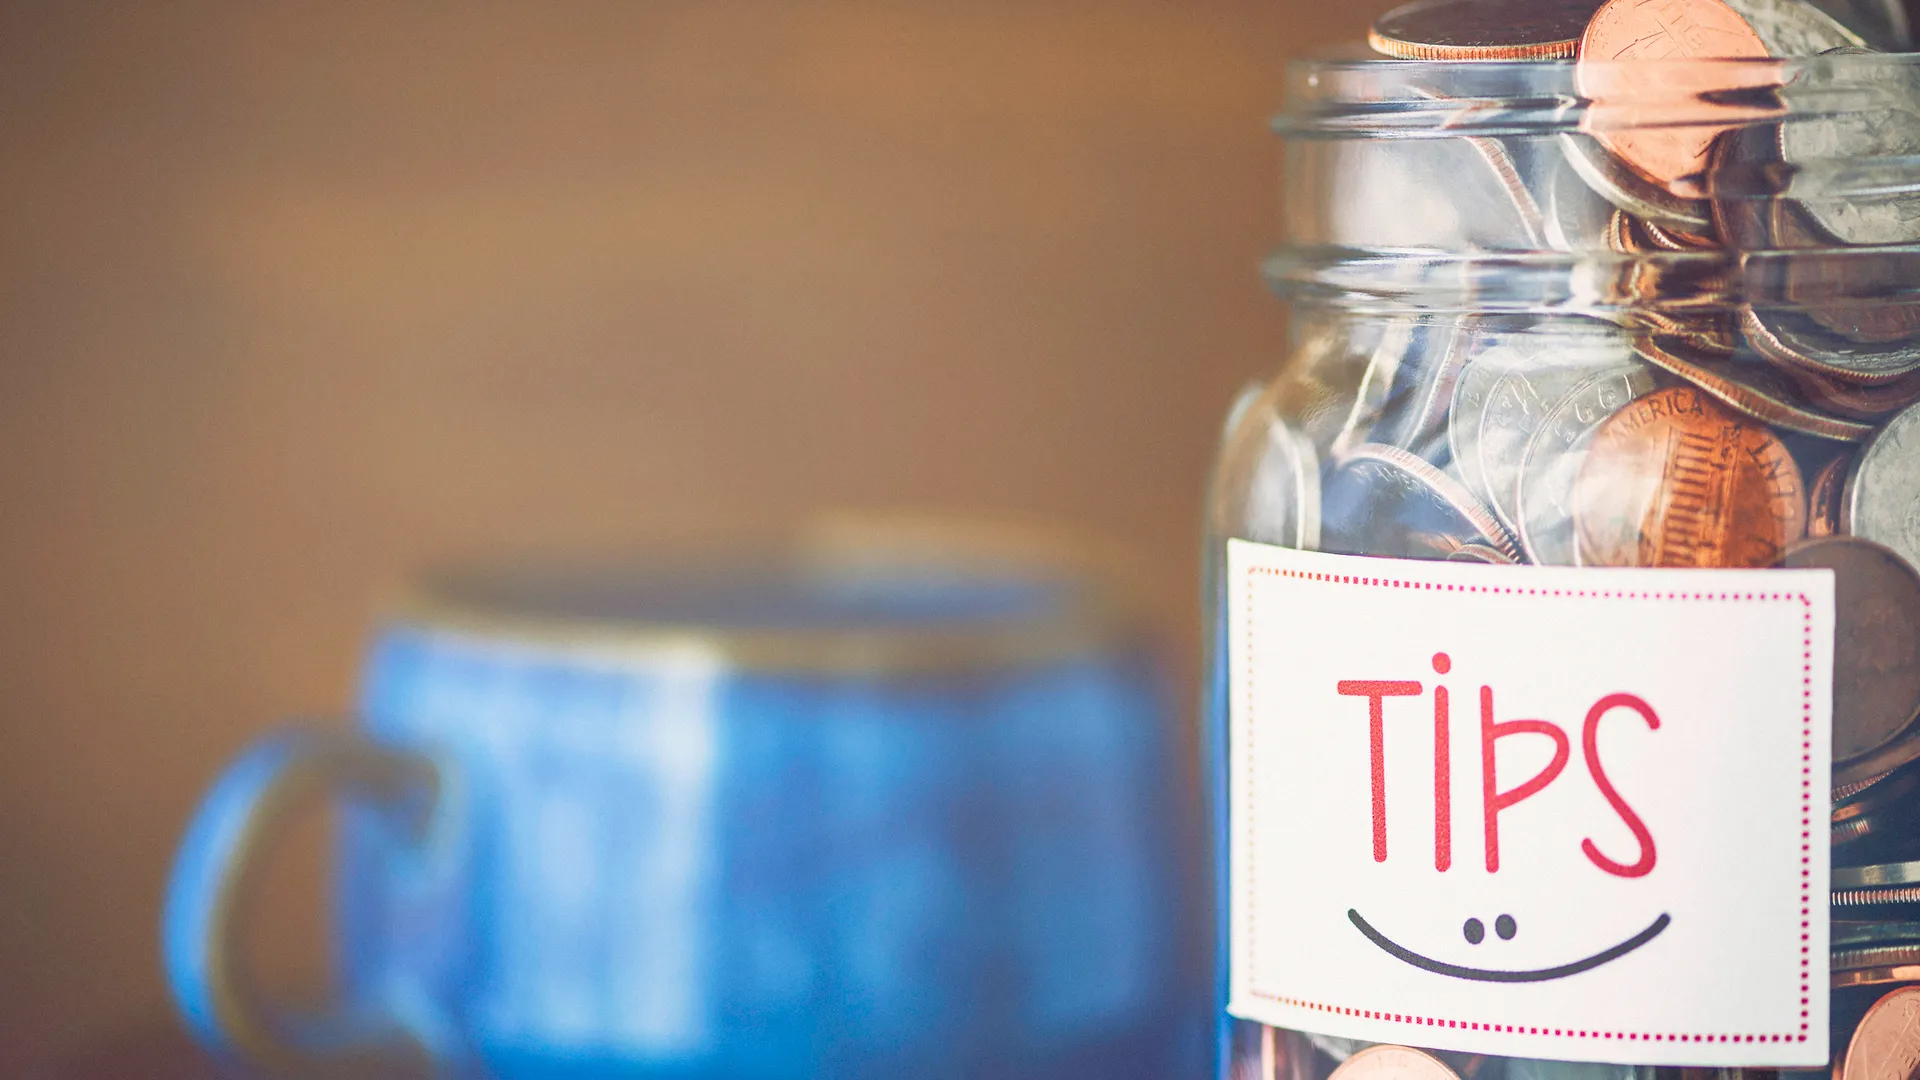 Tip jar in coffee shop or restaurant.